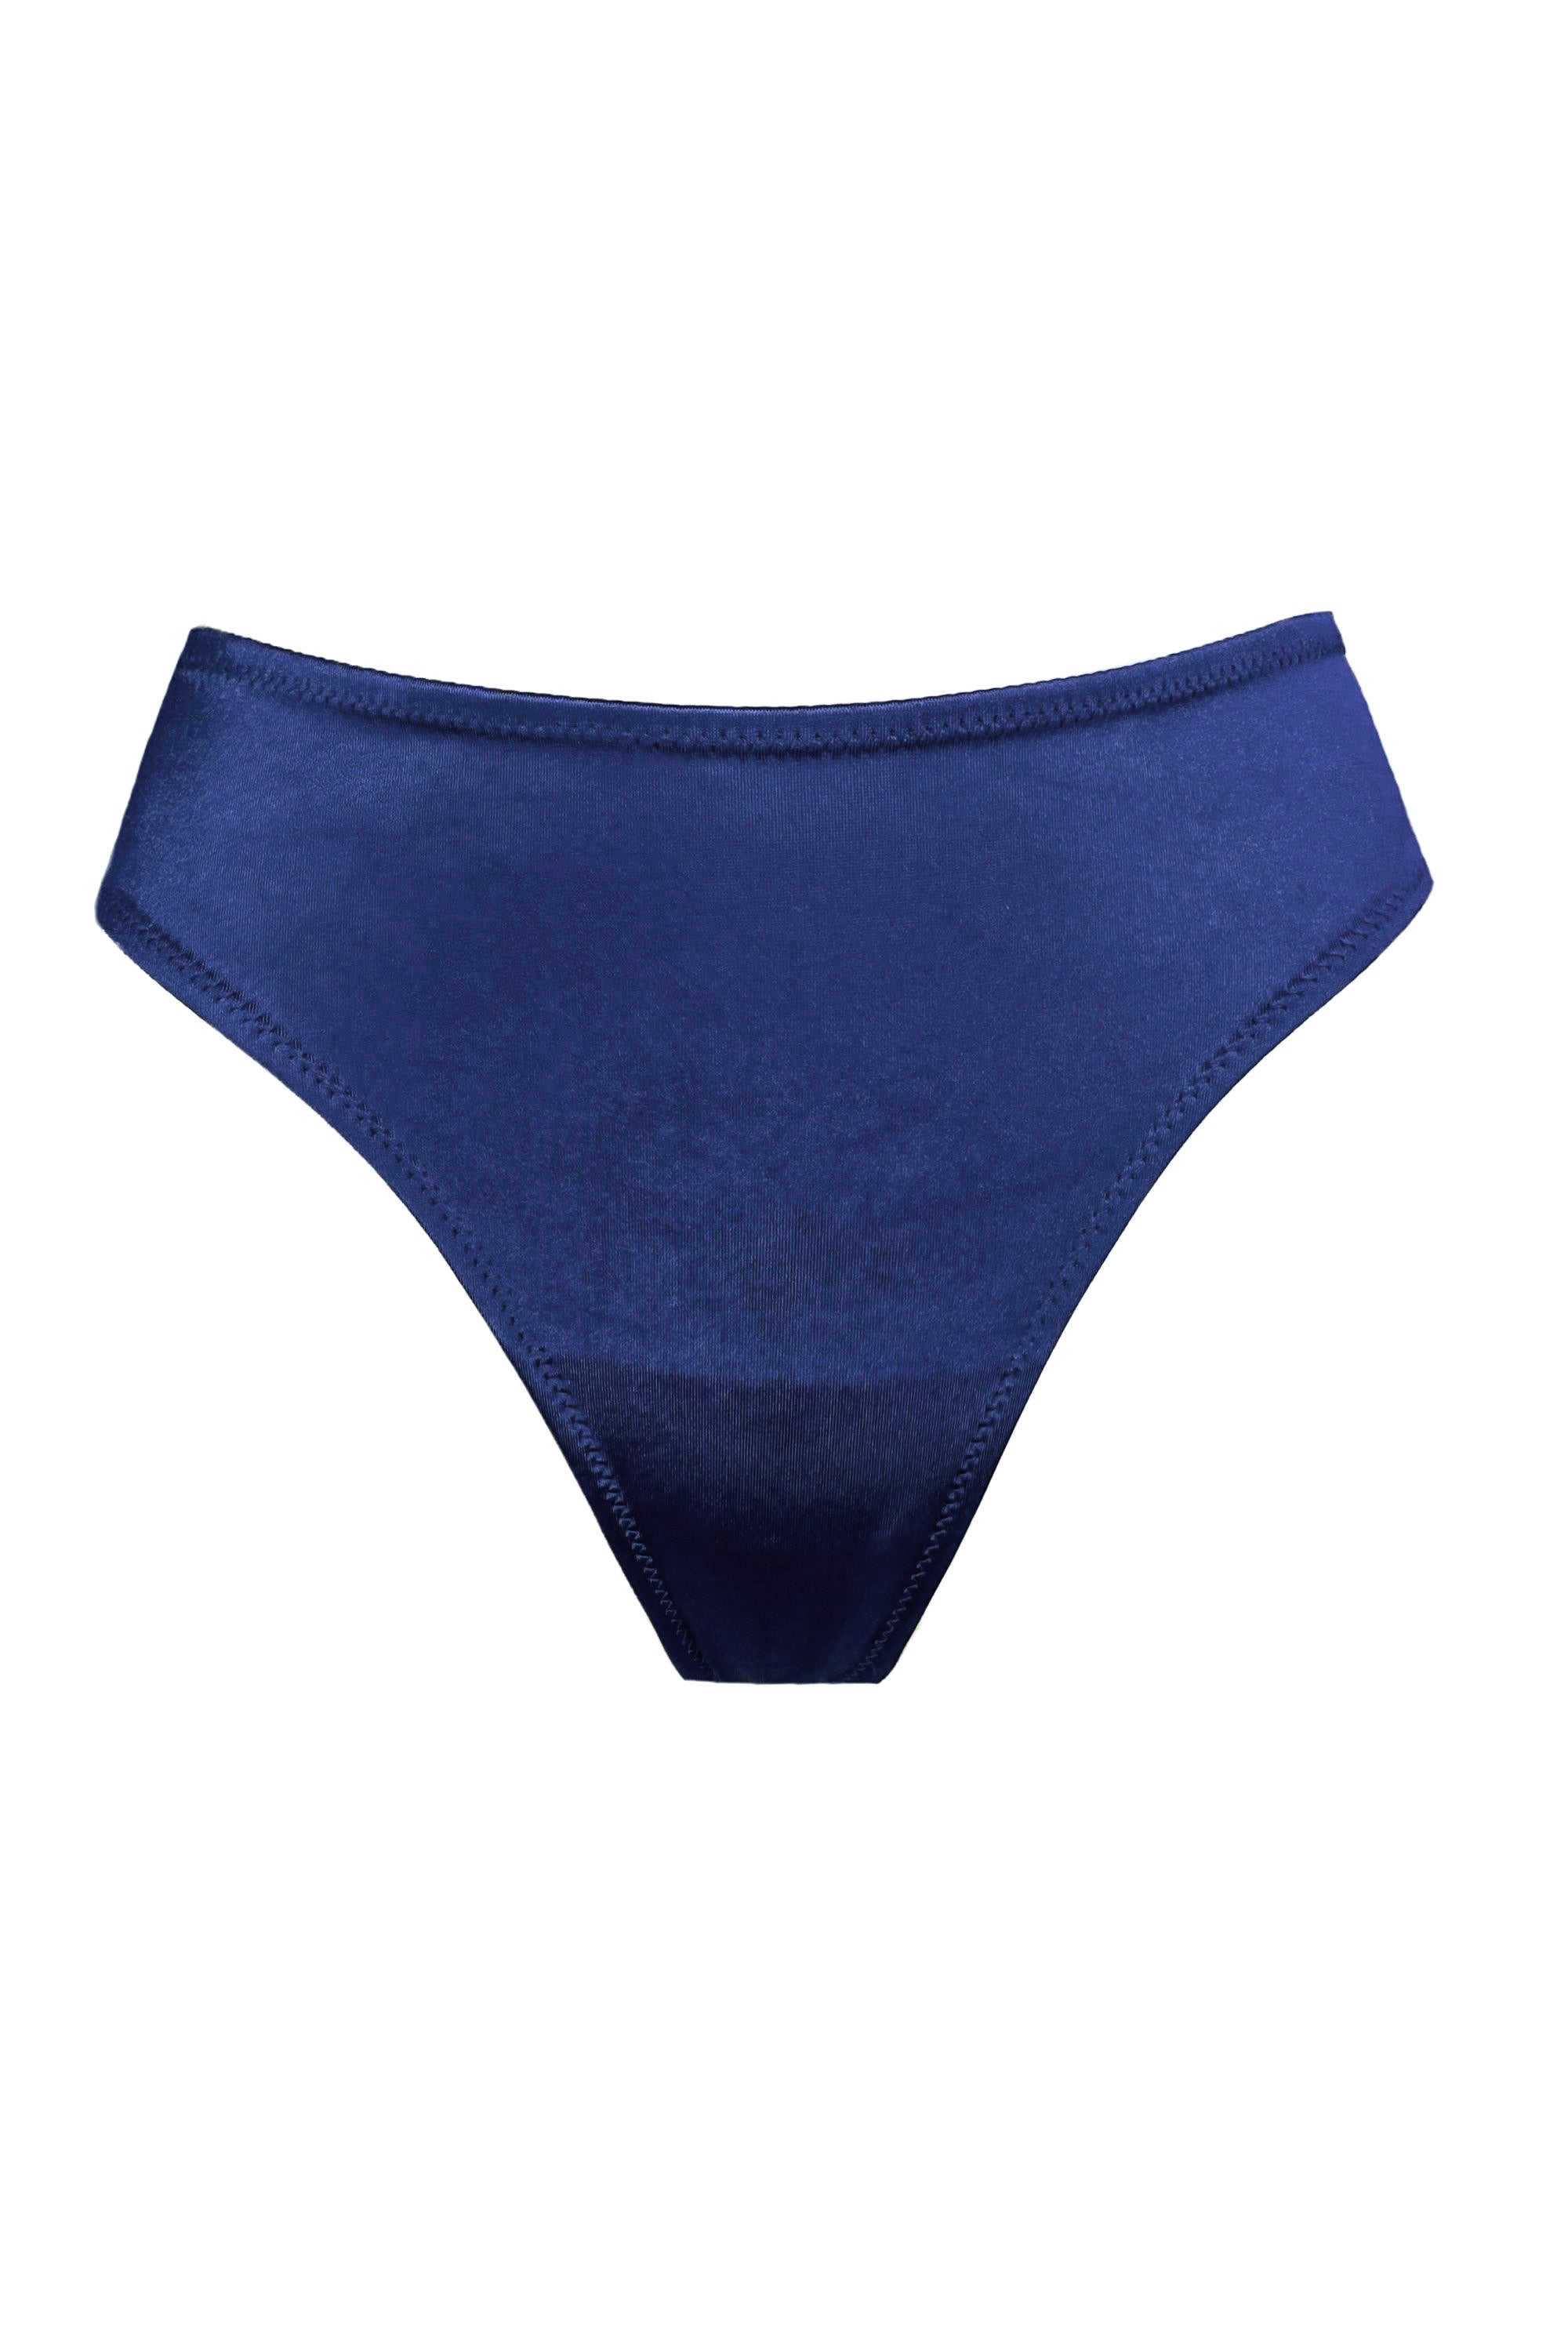 Joli Gloss navy mid-waisted thongs